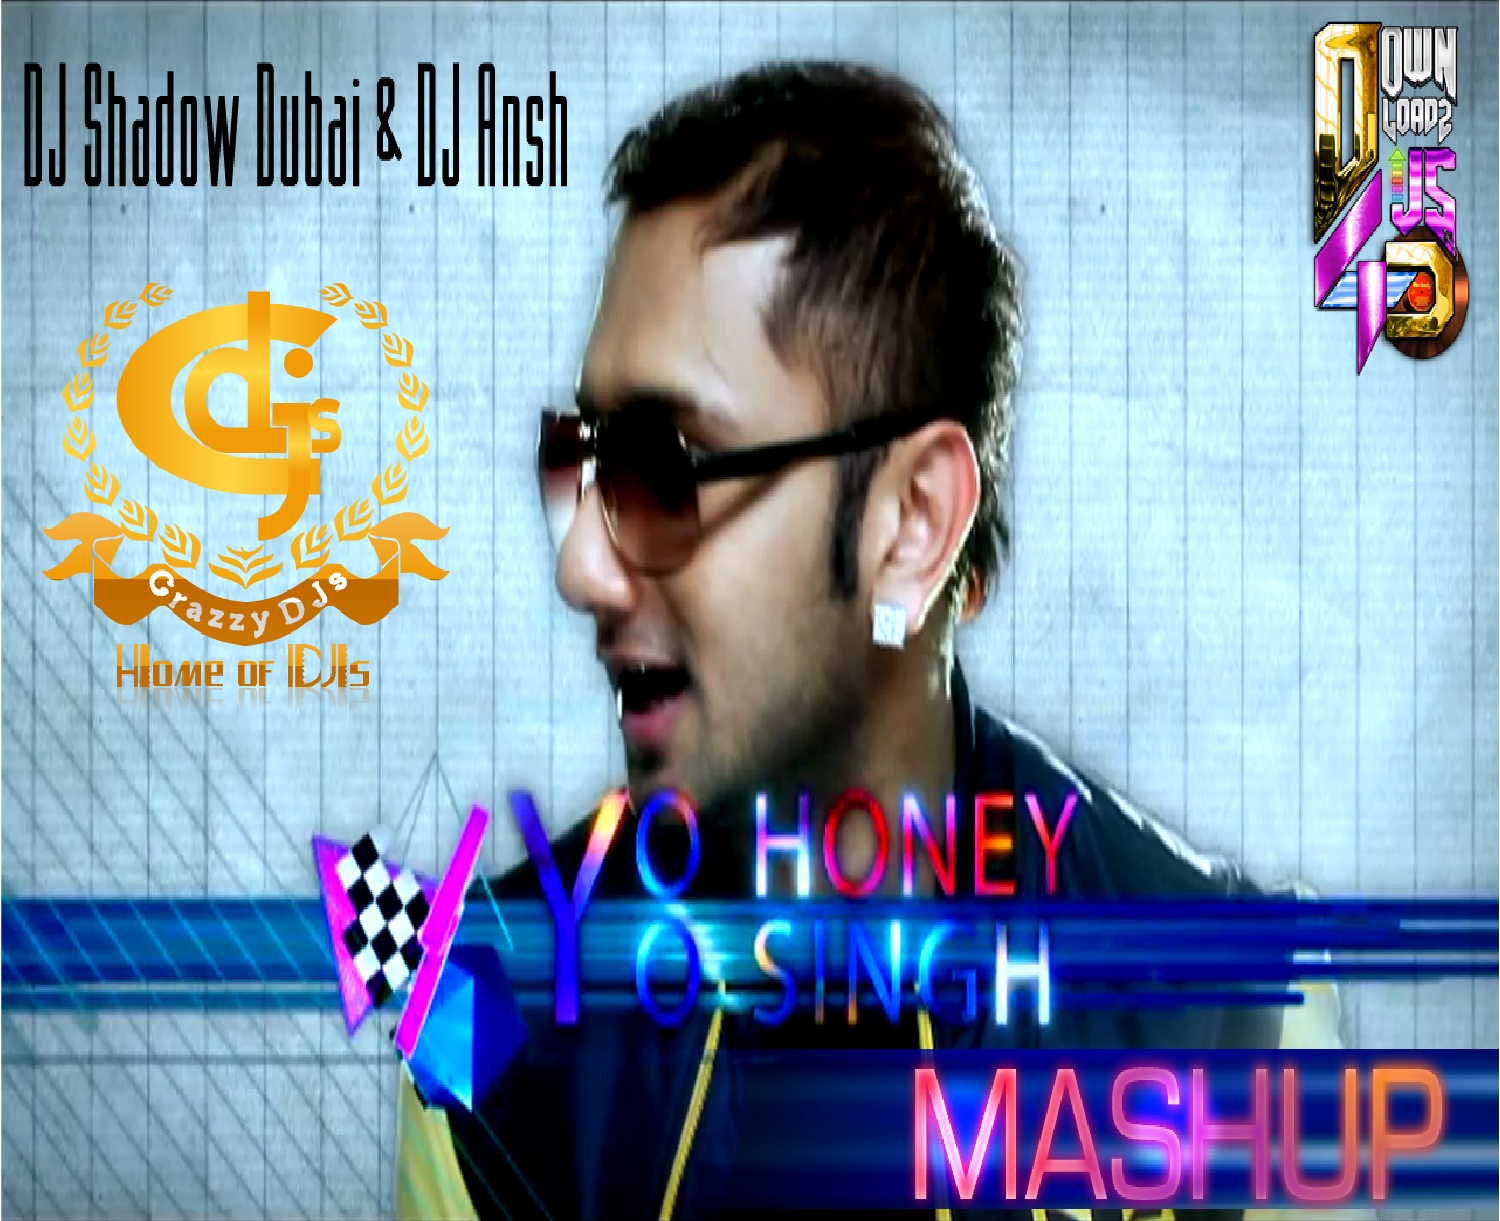 Yo Yo Honey Singh Mashup Dj Shadow Dubai And Dj Ansh Crazzy Djs 